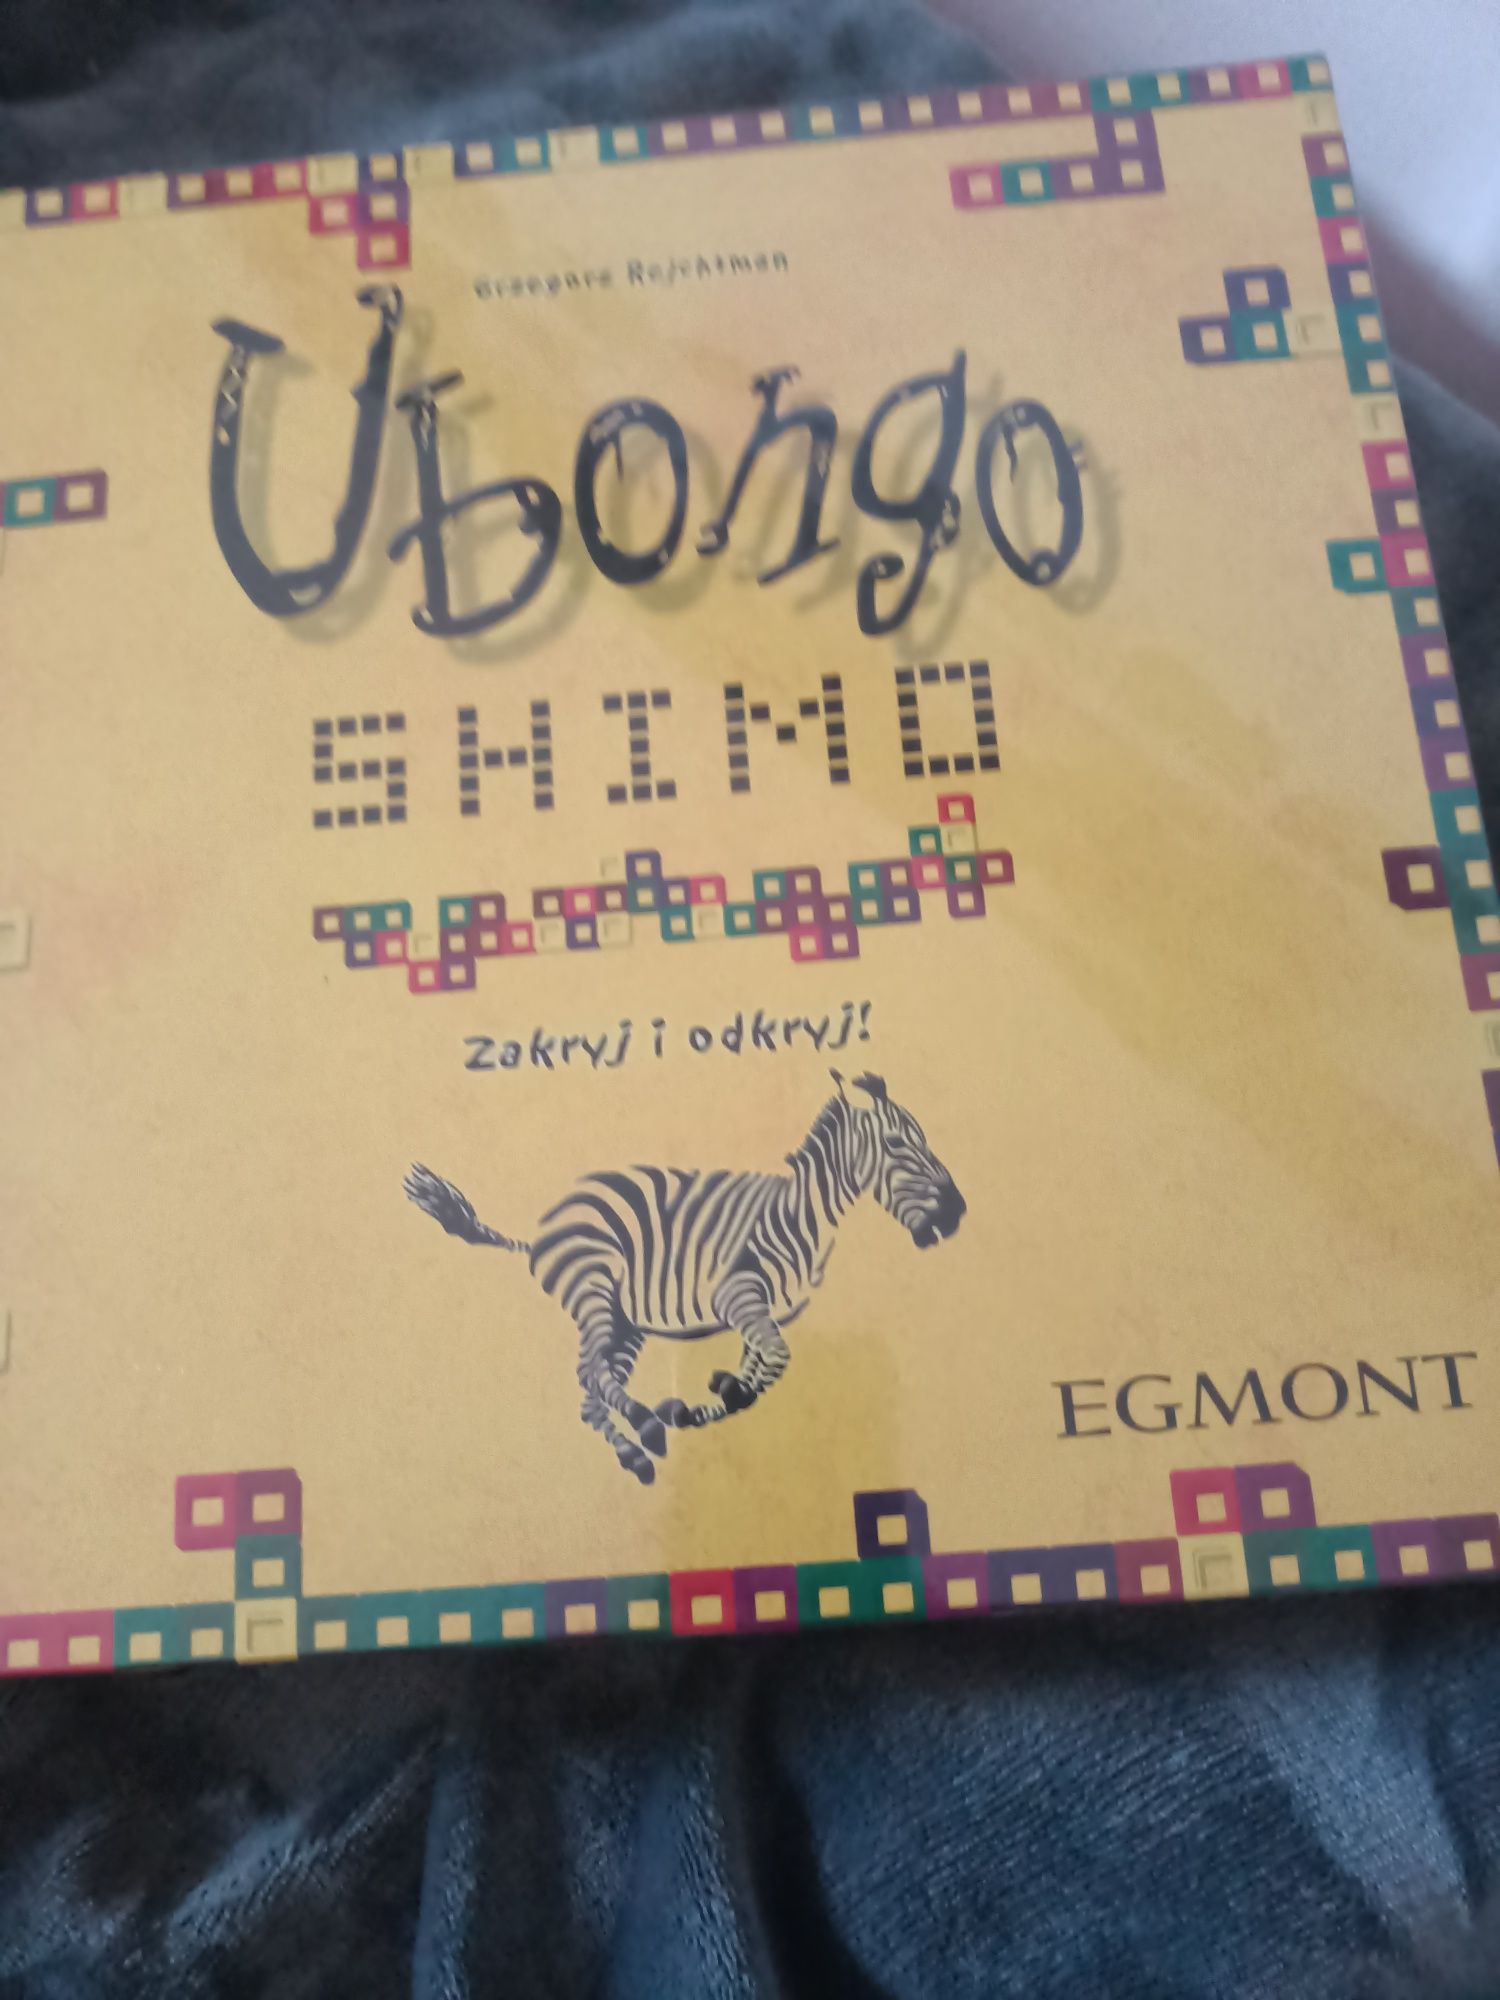 Gra Ubongo Shimo